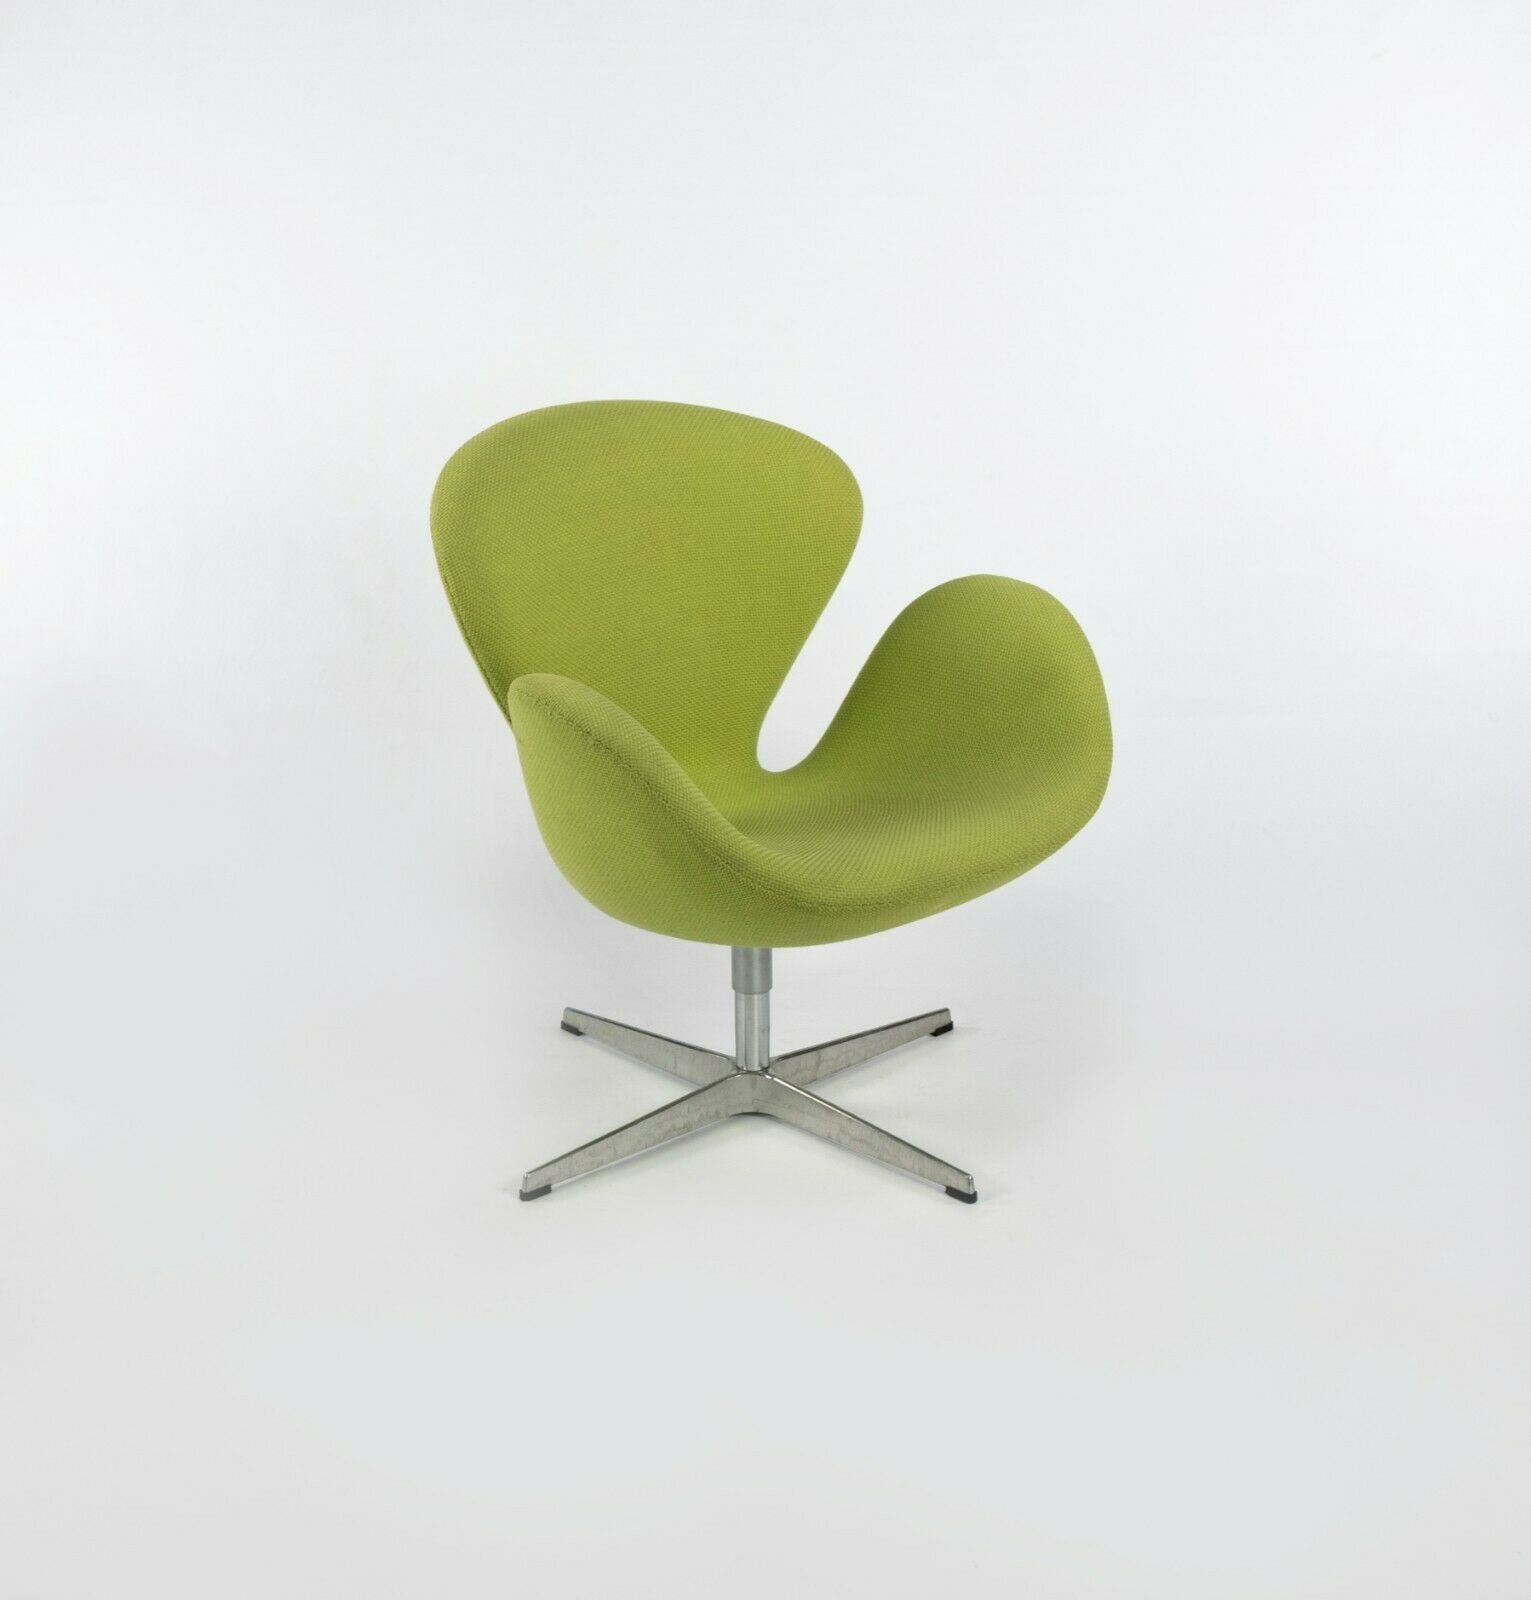 2007 Arne Jacobsen Swan Chair by Fritz Hansen with Light Green Fabric Upholstery